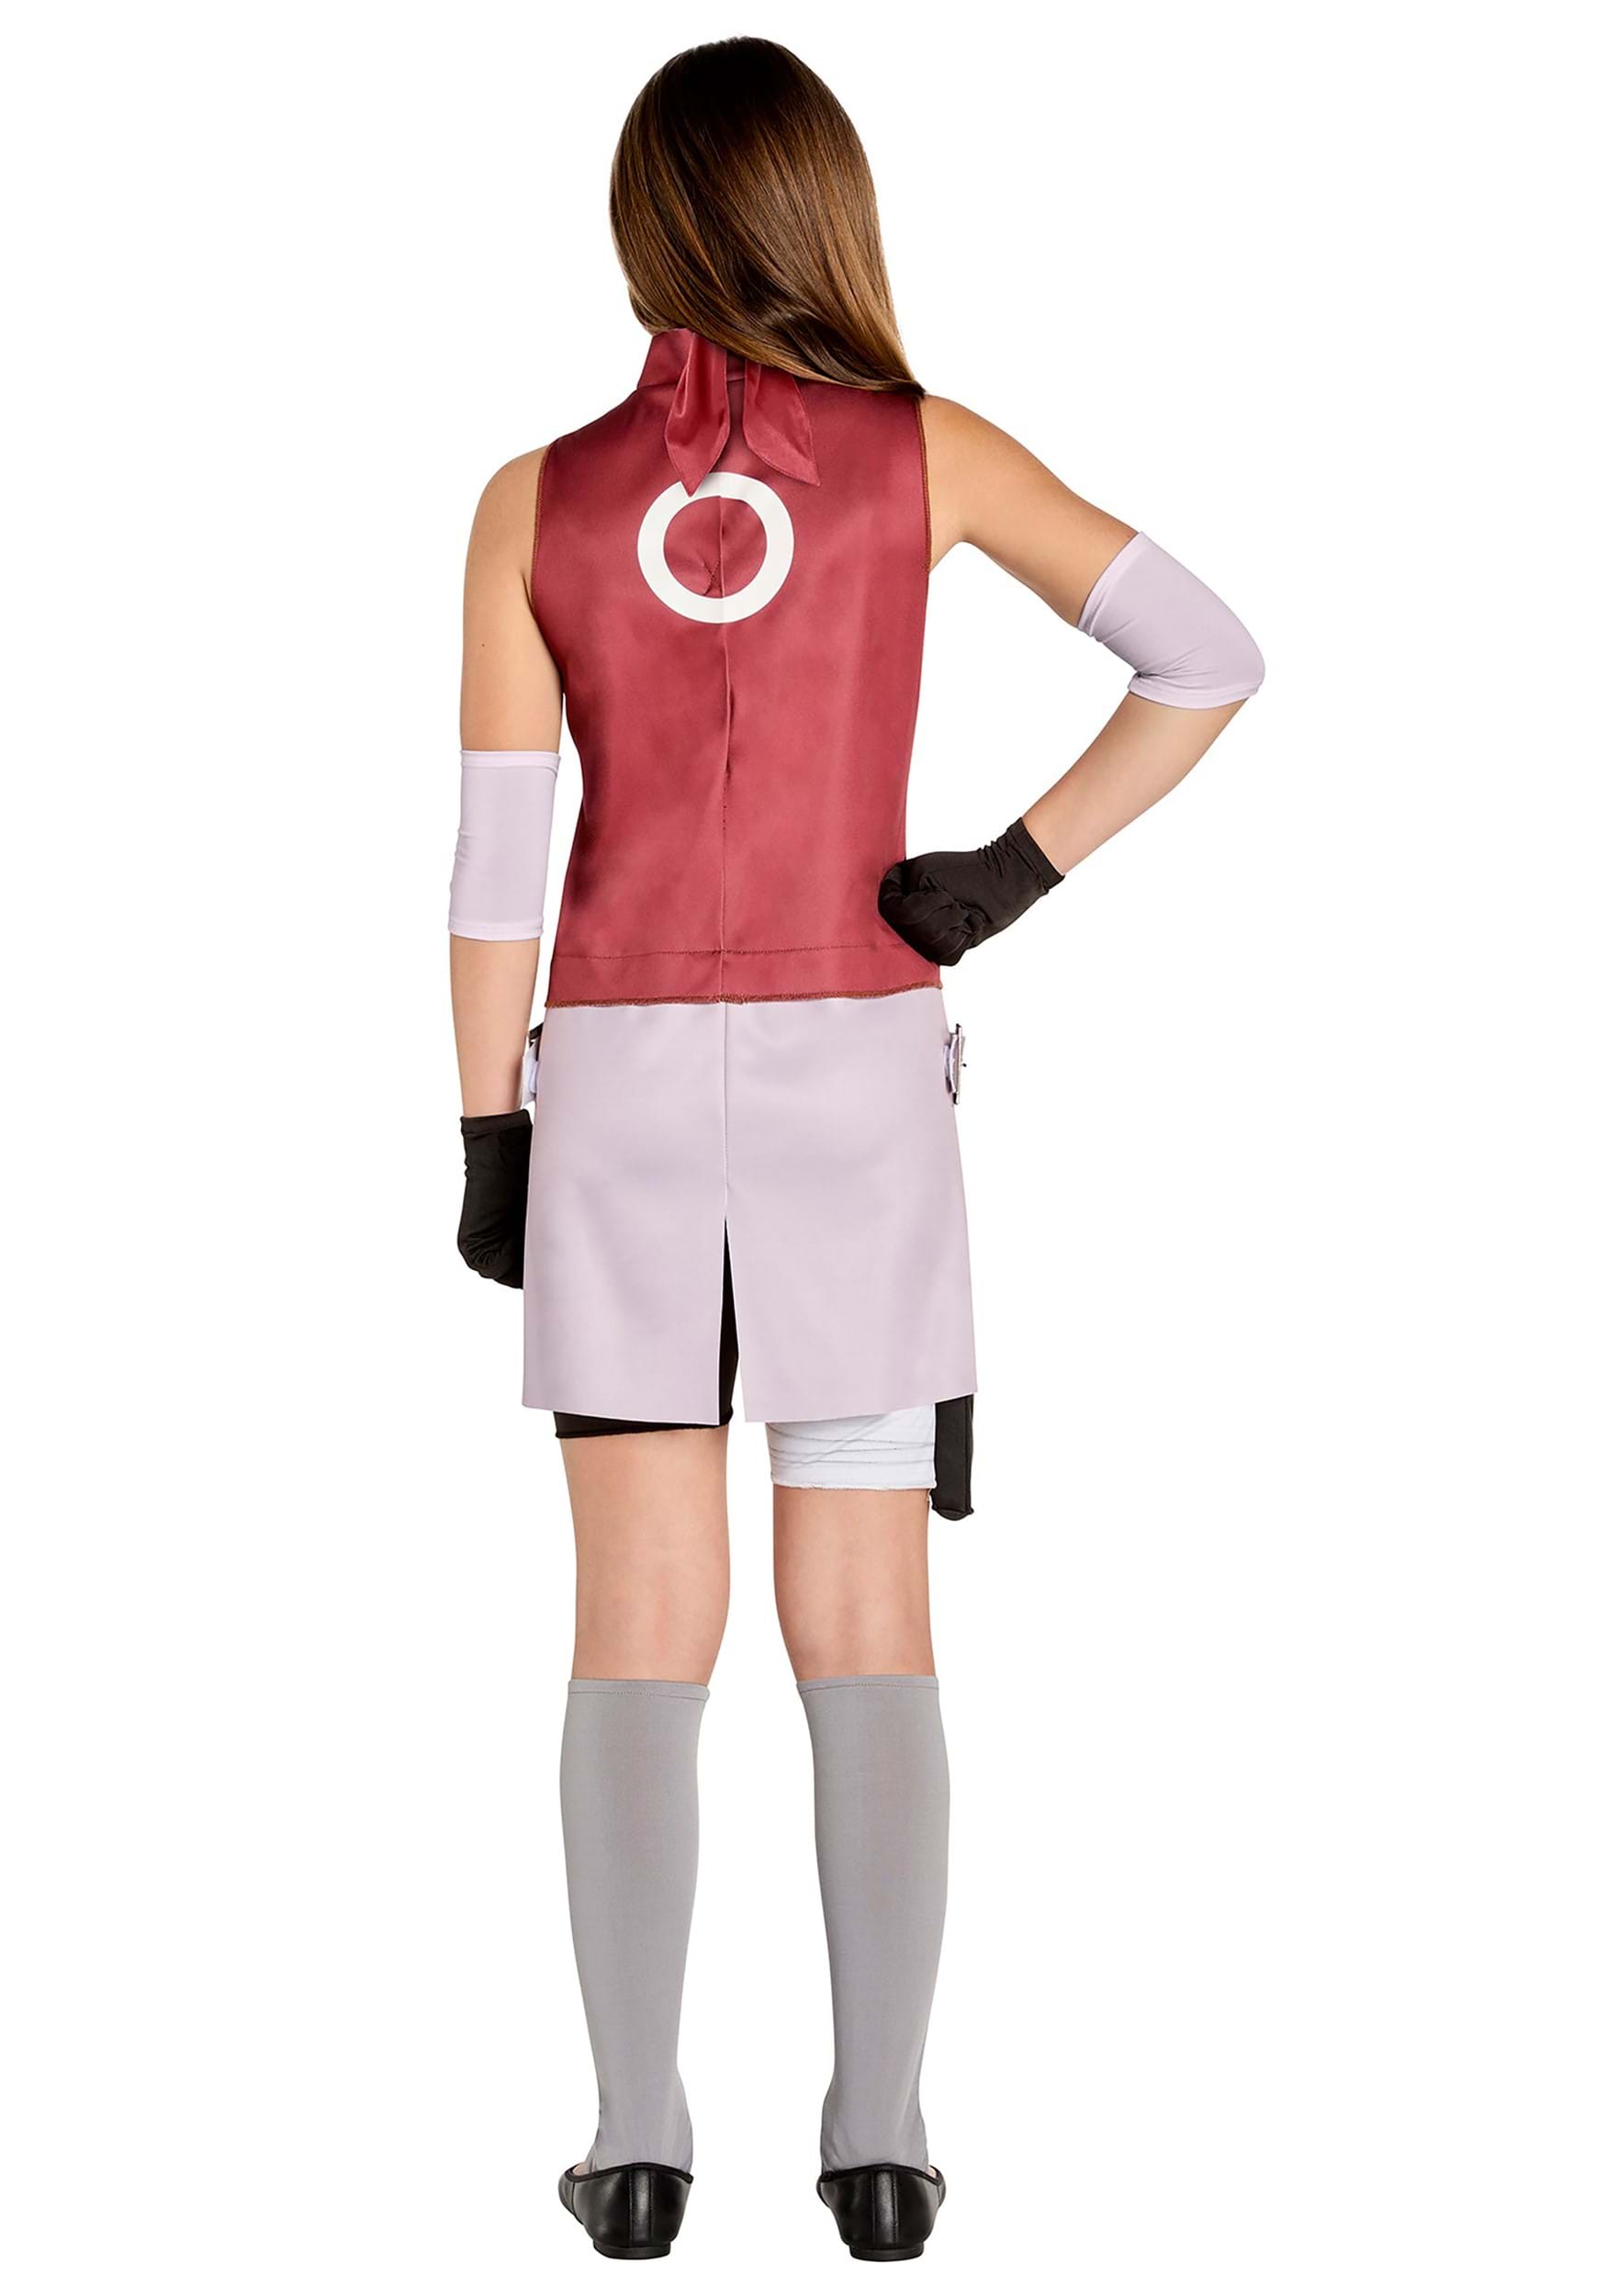 Naruto Shippuden Girl's Sakura Costume